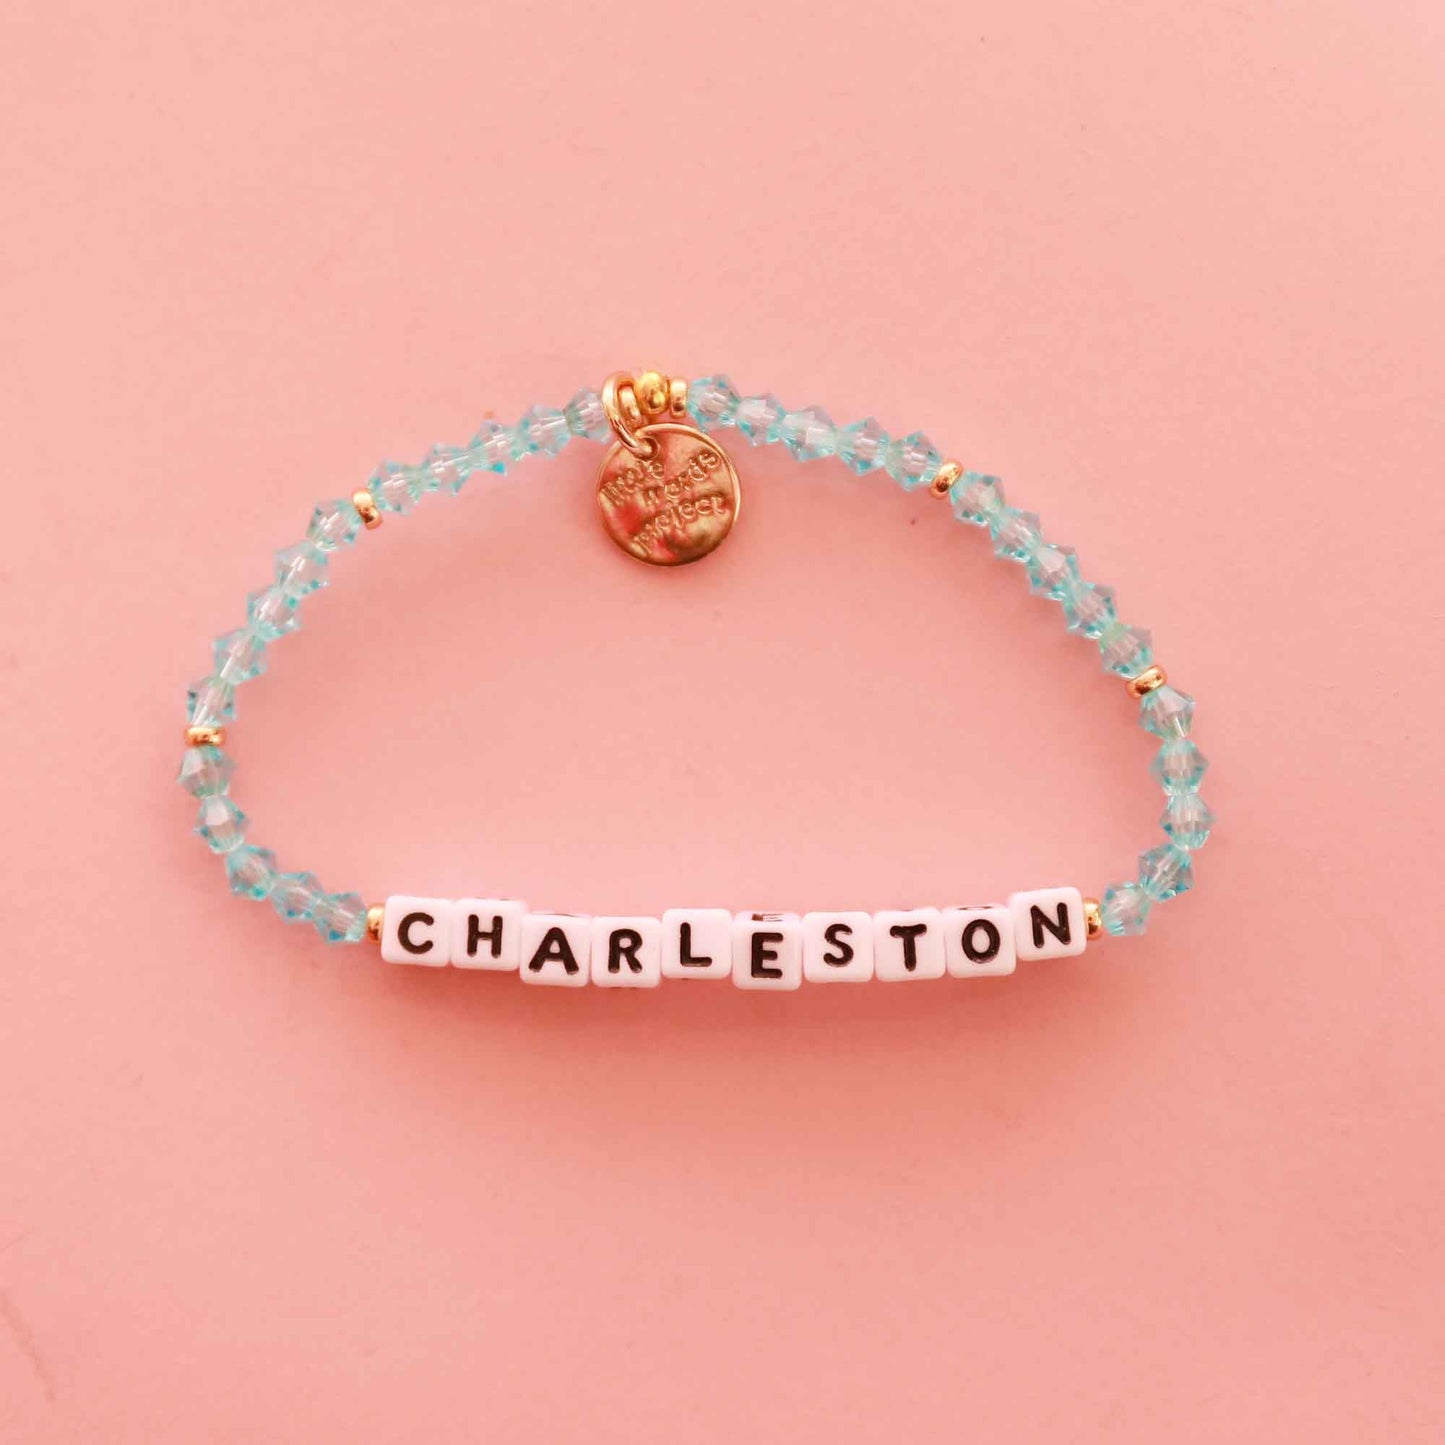 Little Words Project® "Charleston" Bracelet